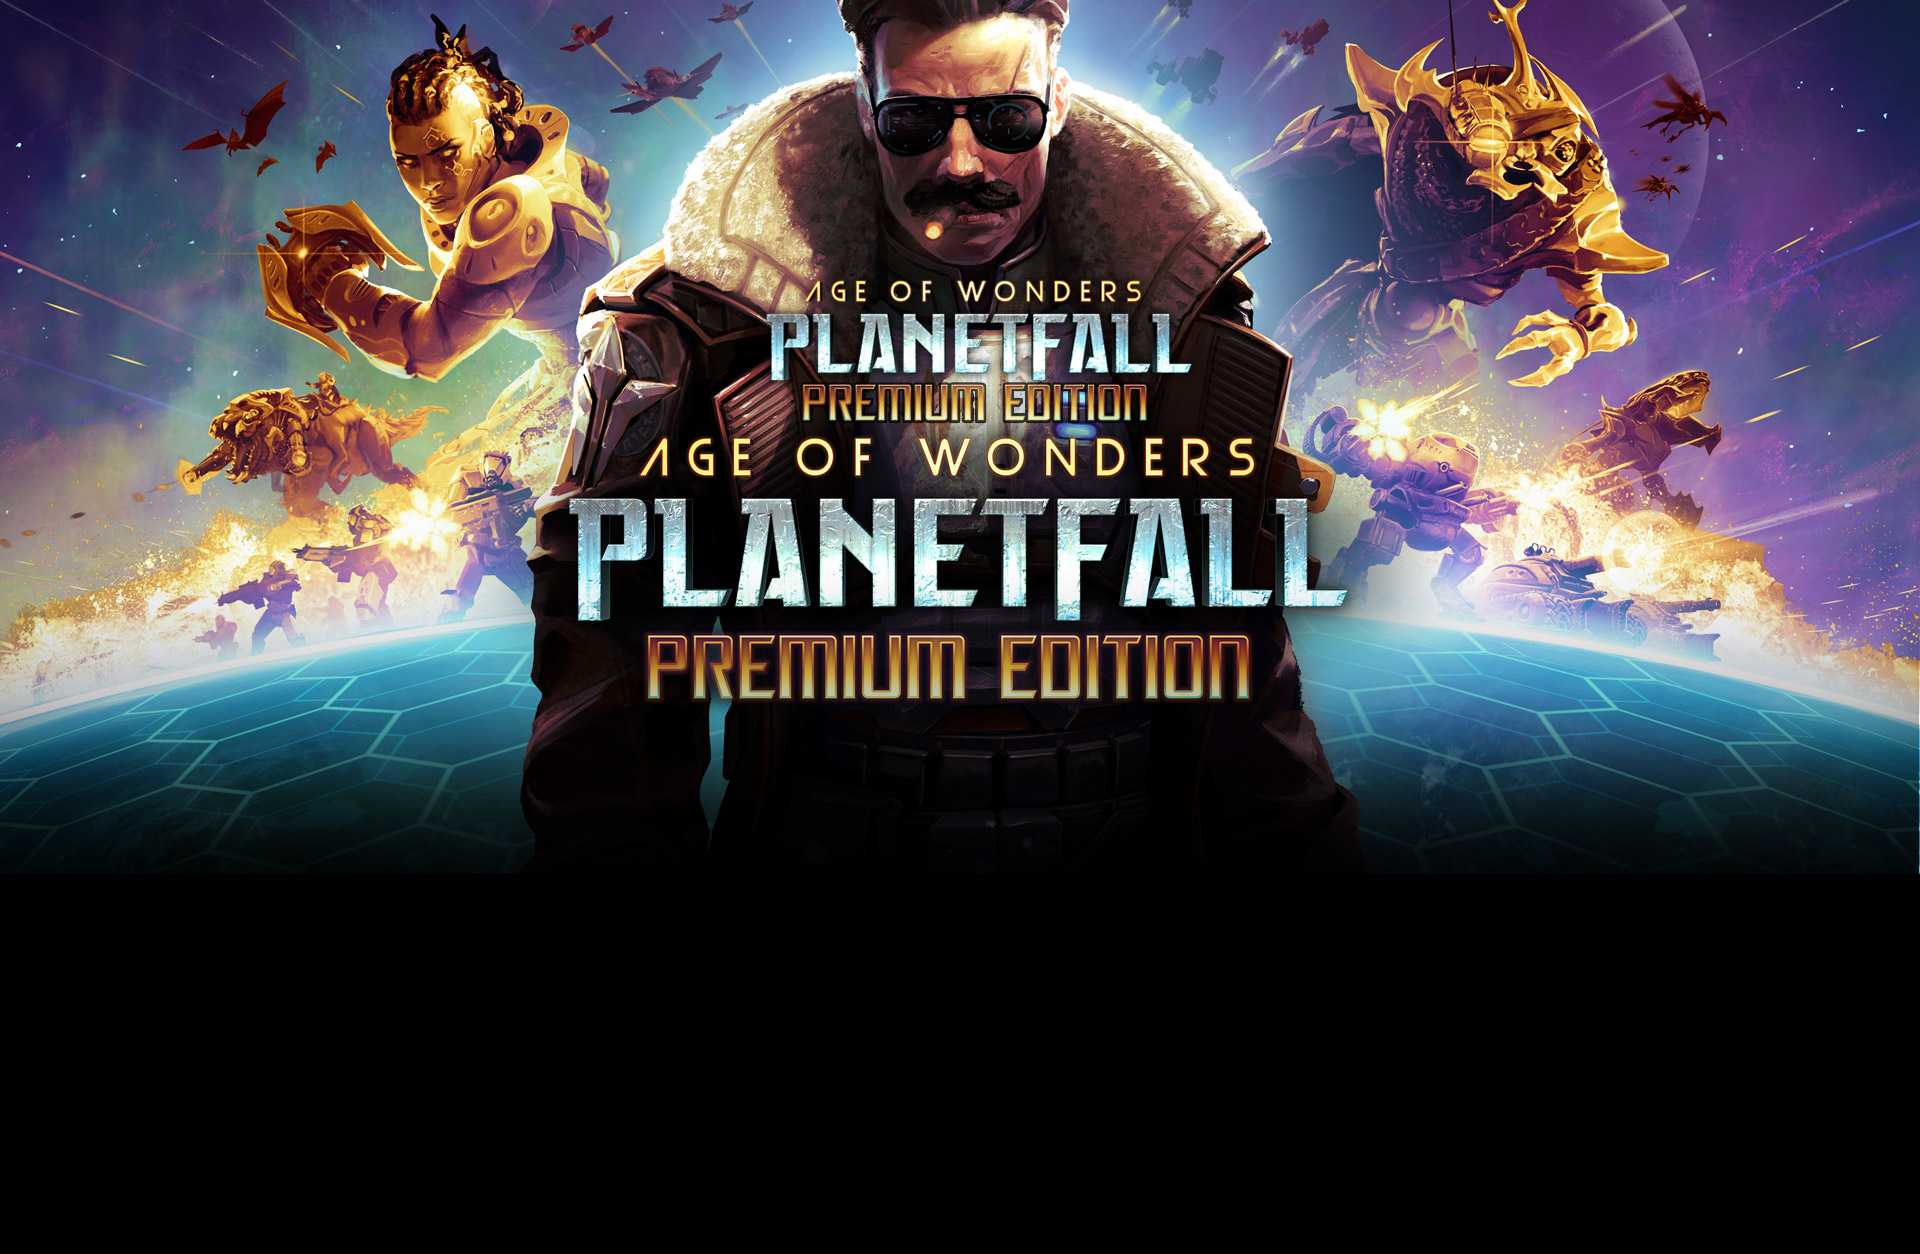 age of wonders: planetfall - premium edition